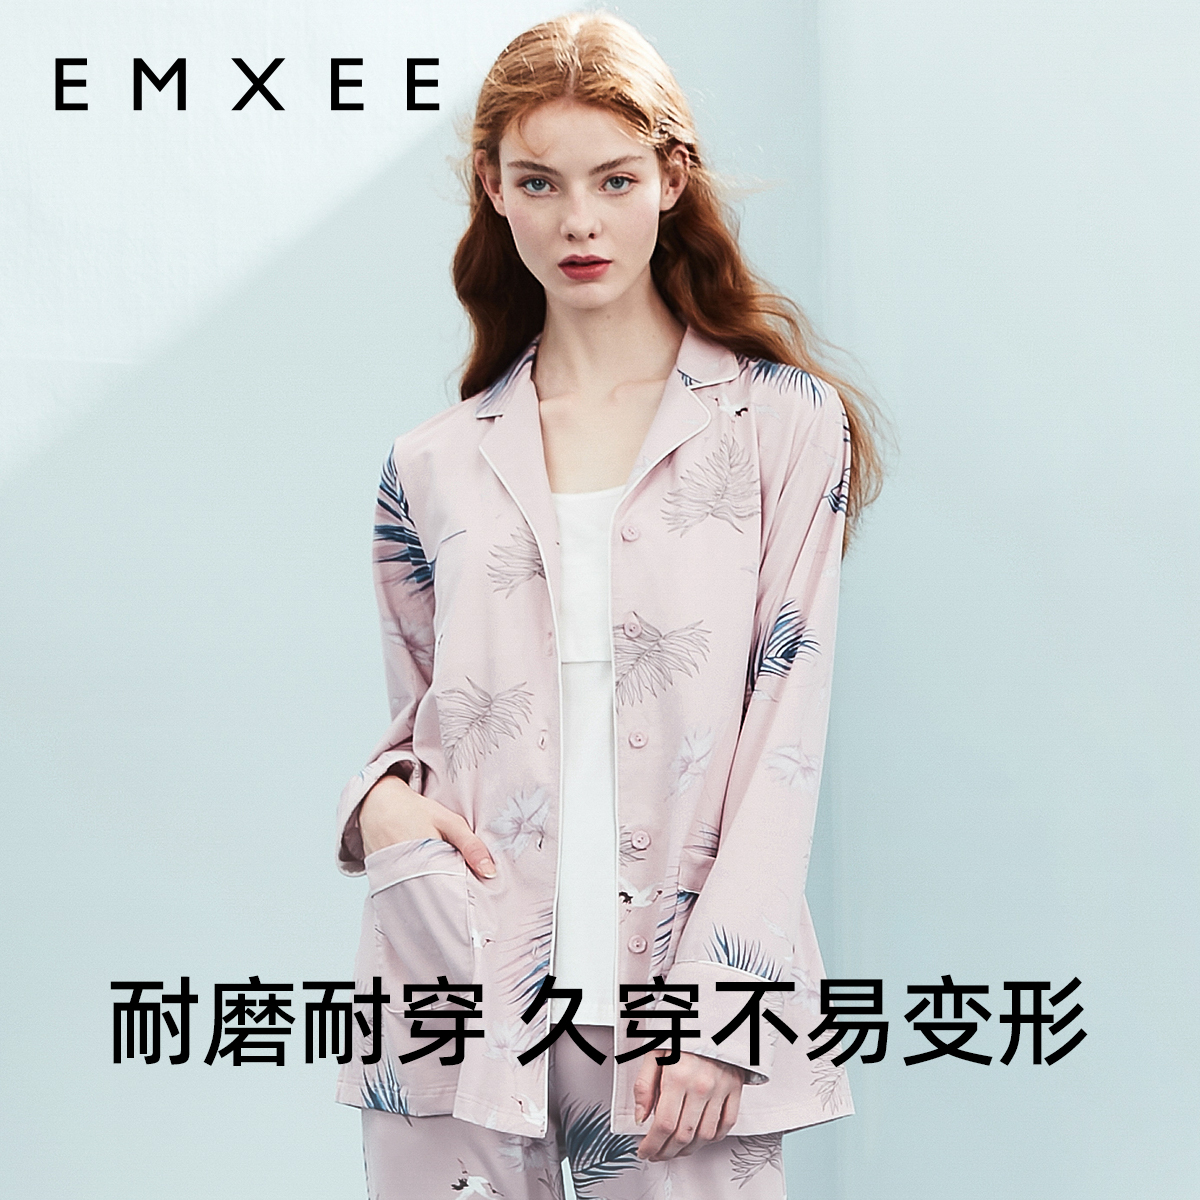 EMXEE 嫚熙 孕产妇家居服套装 189.9元